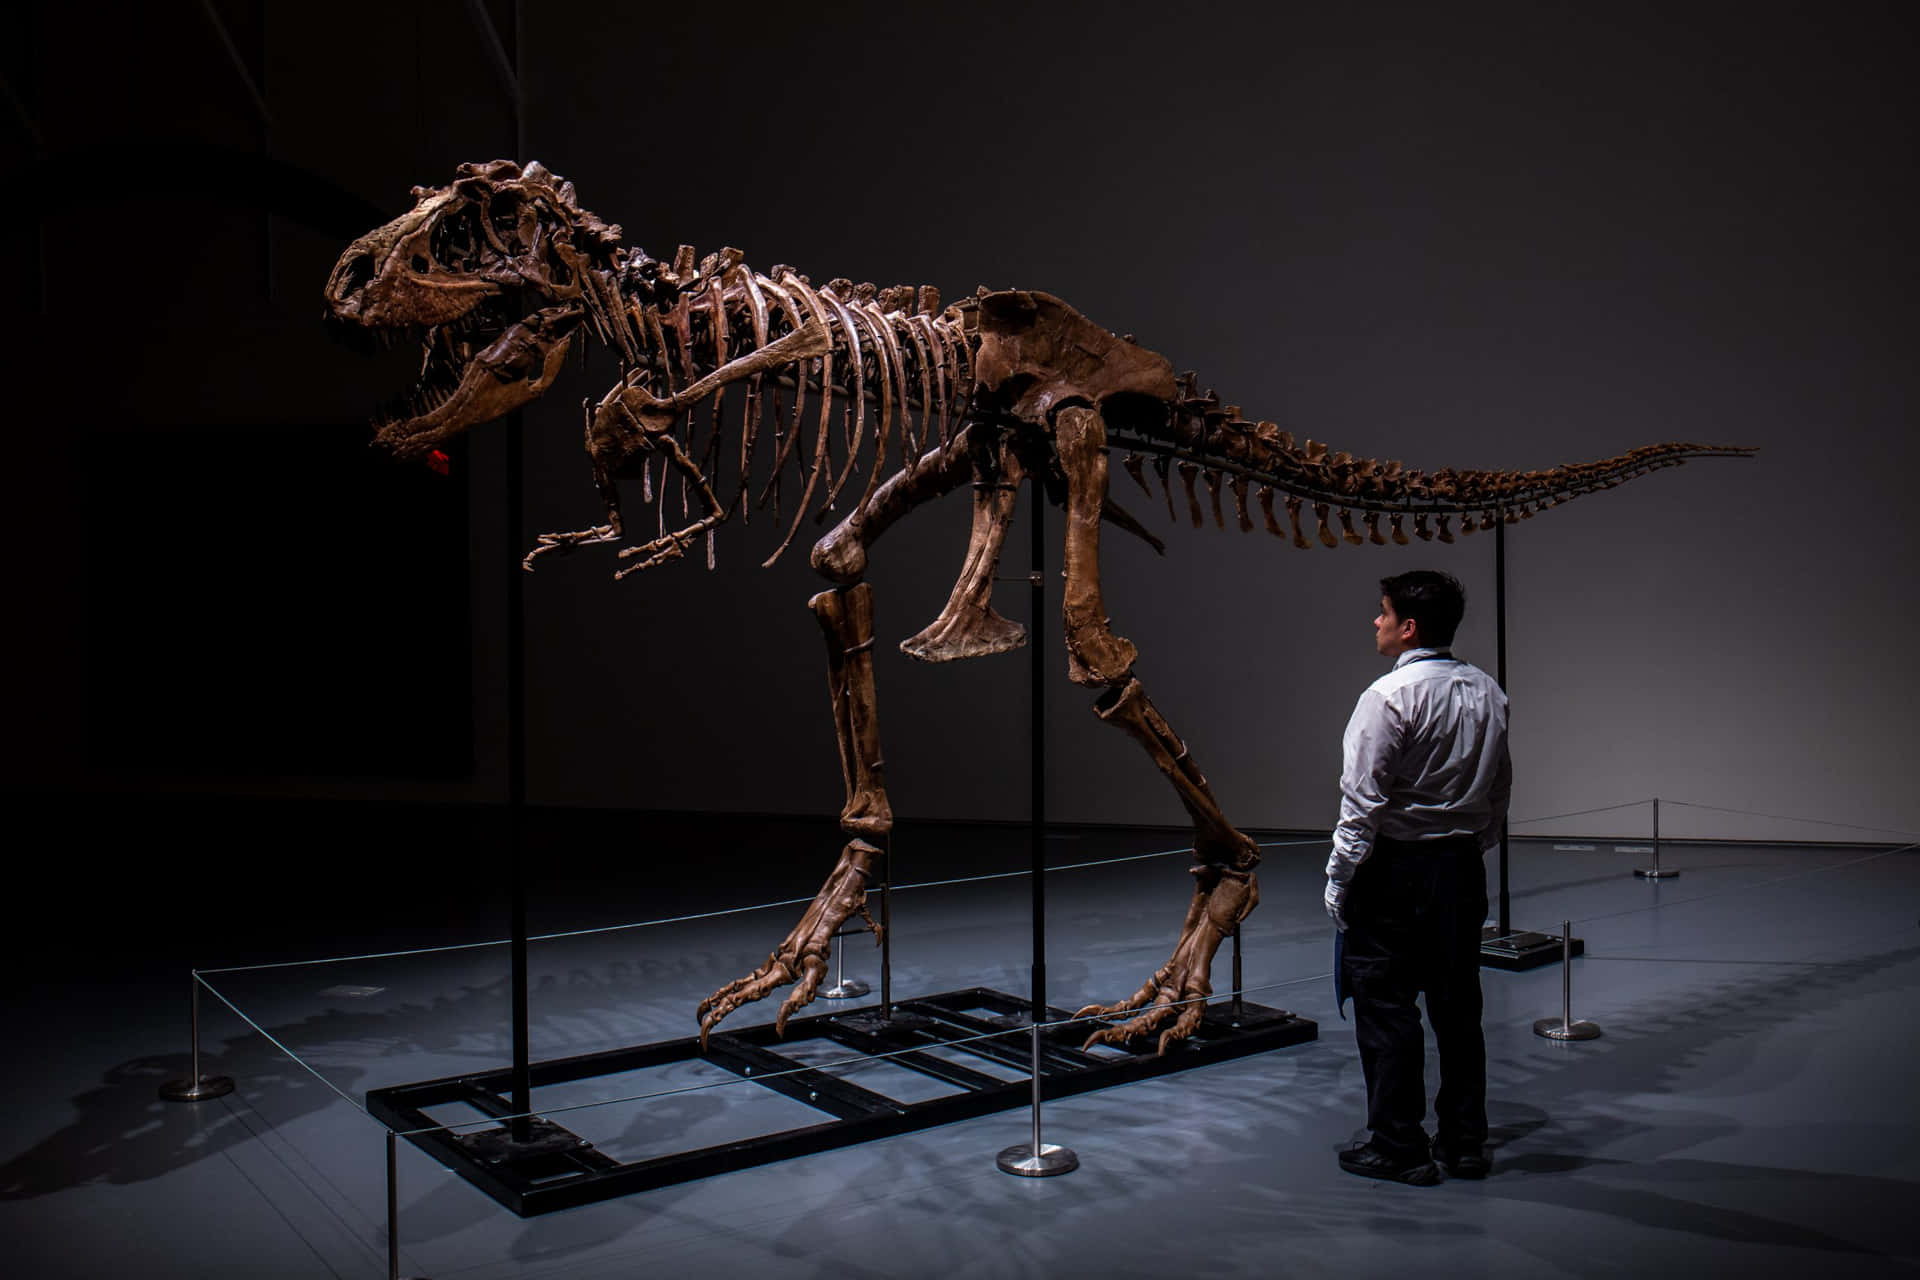 Unhombre Mirando El Esqueleto De Un Tiranosaurio Rex En Un Museo